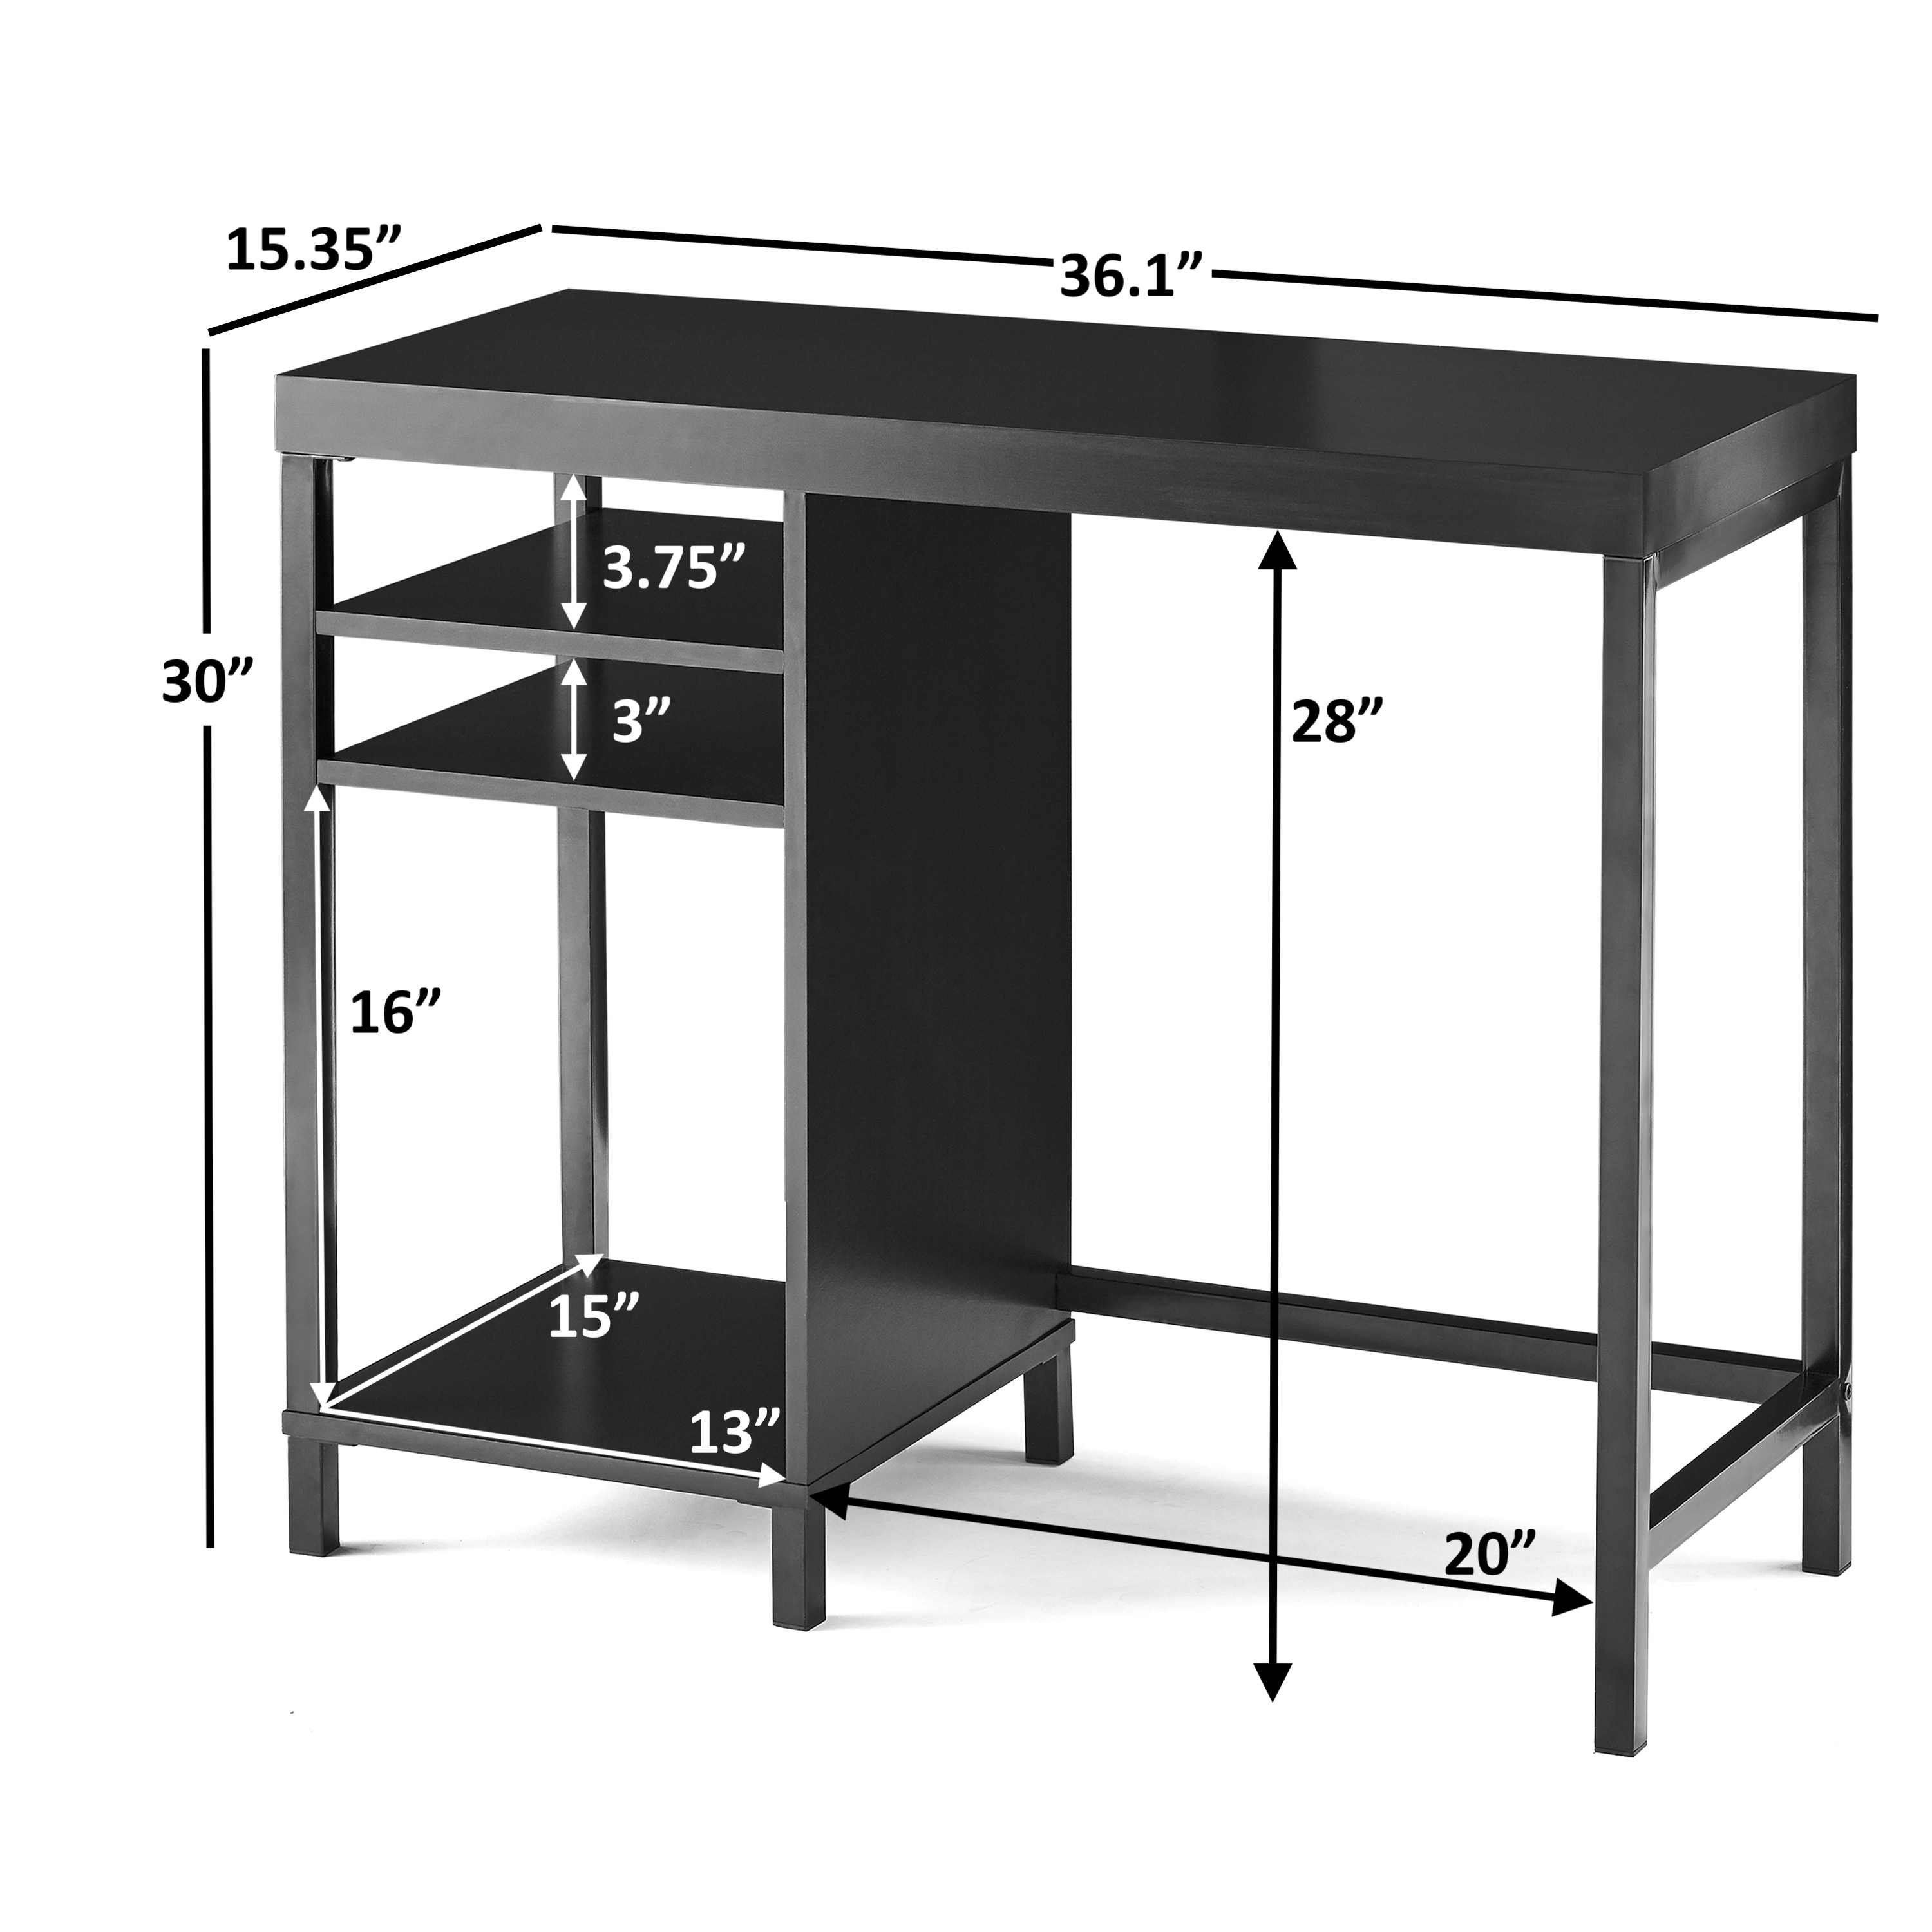 Mainstays Sumpter Park Cube Storage Desk, Black - image 2 of 5